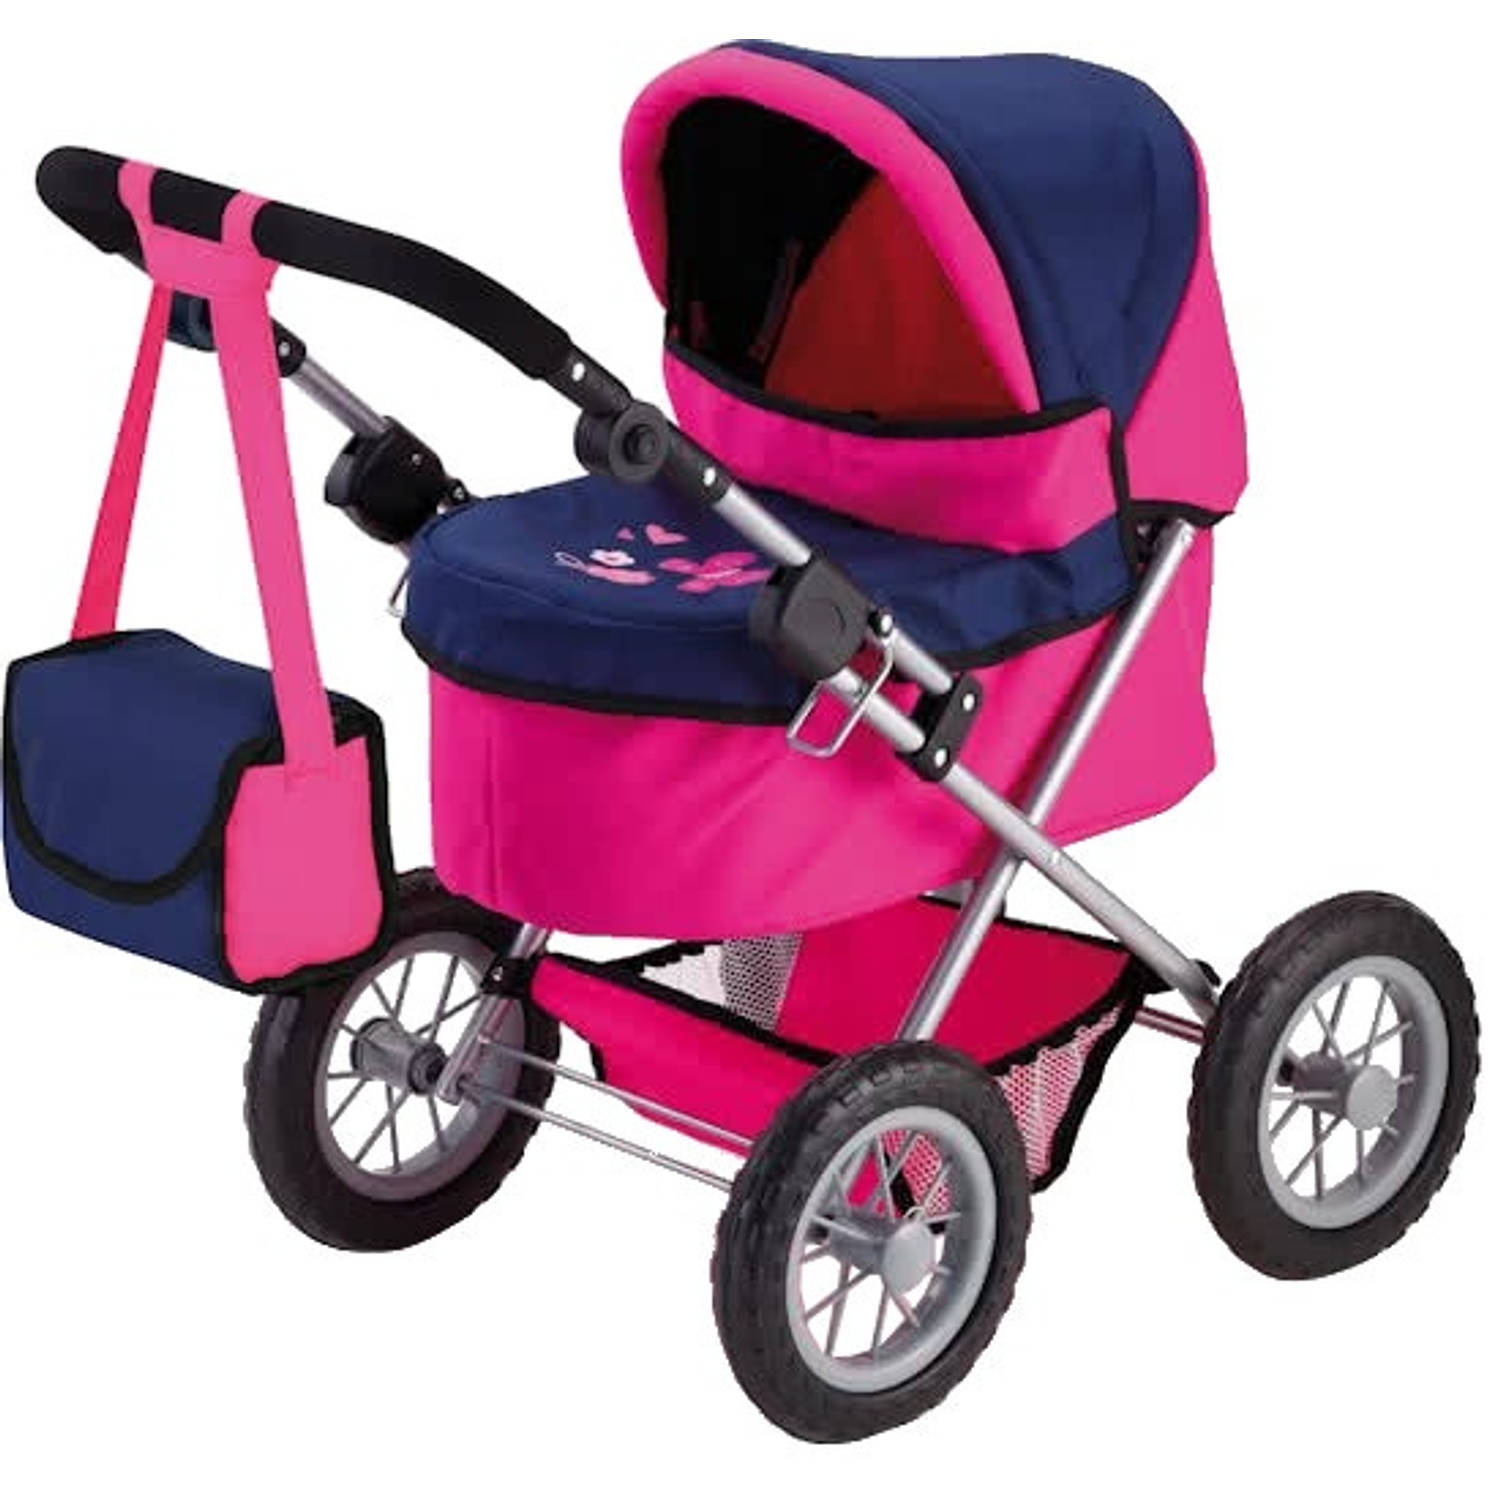 Bayer Design poppenwagen trendy roze/donkerblauw 67 cm